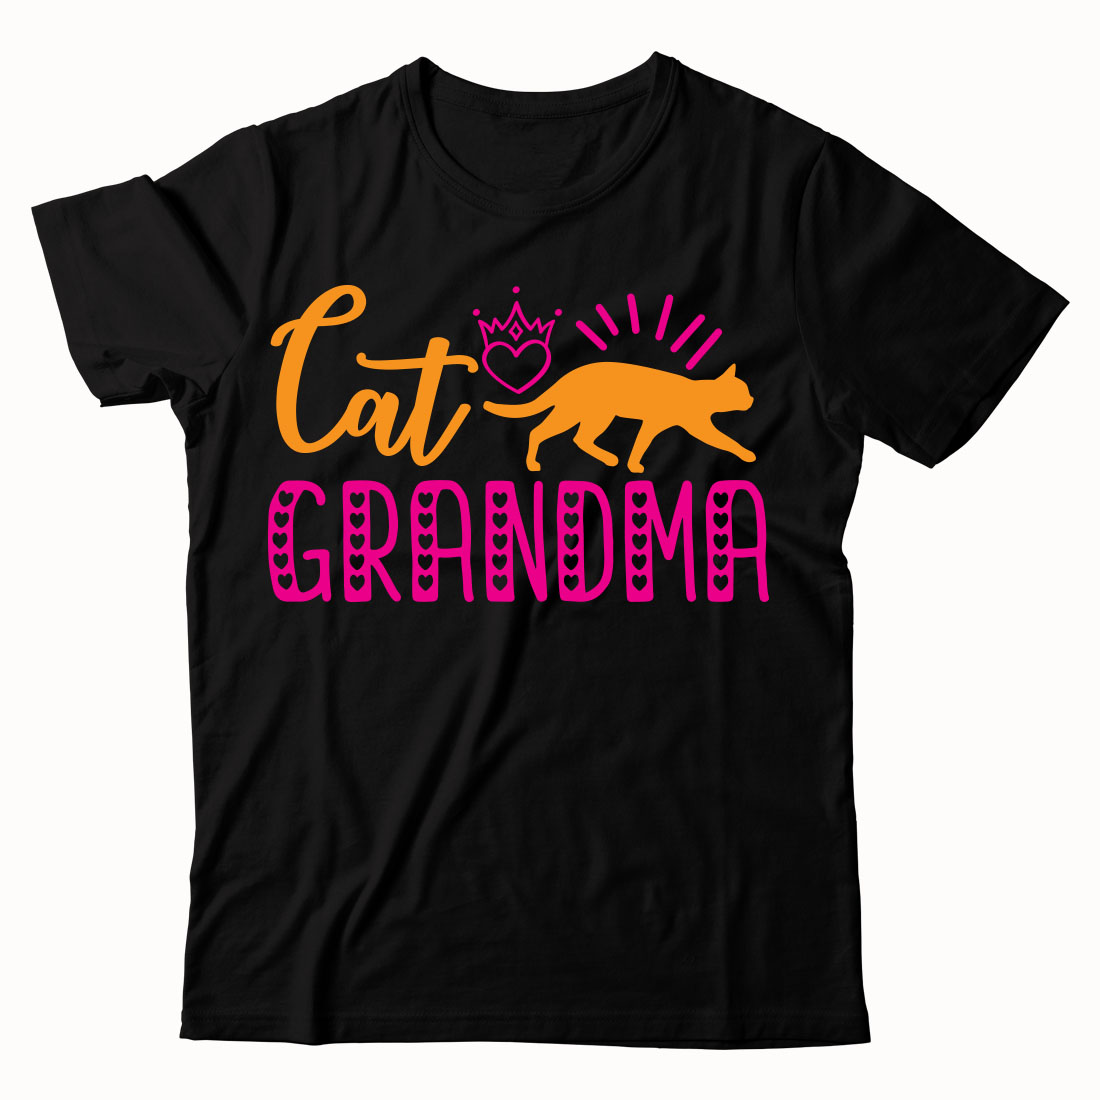 Black t - shirt that says eat grandma.